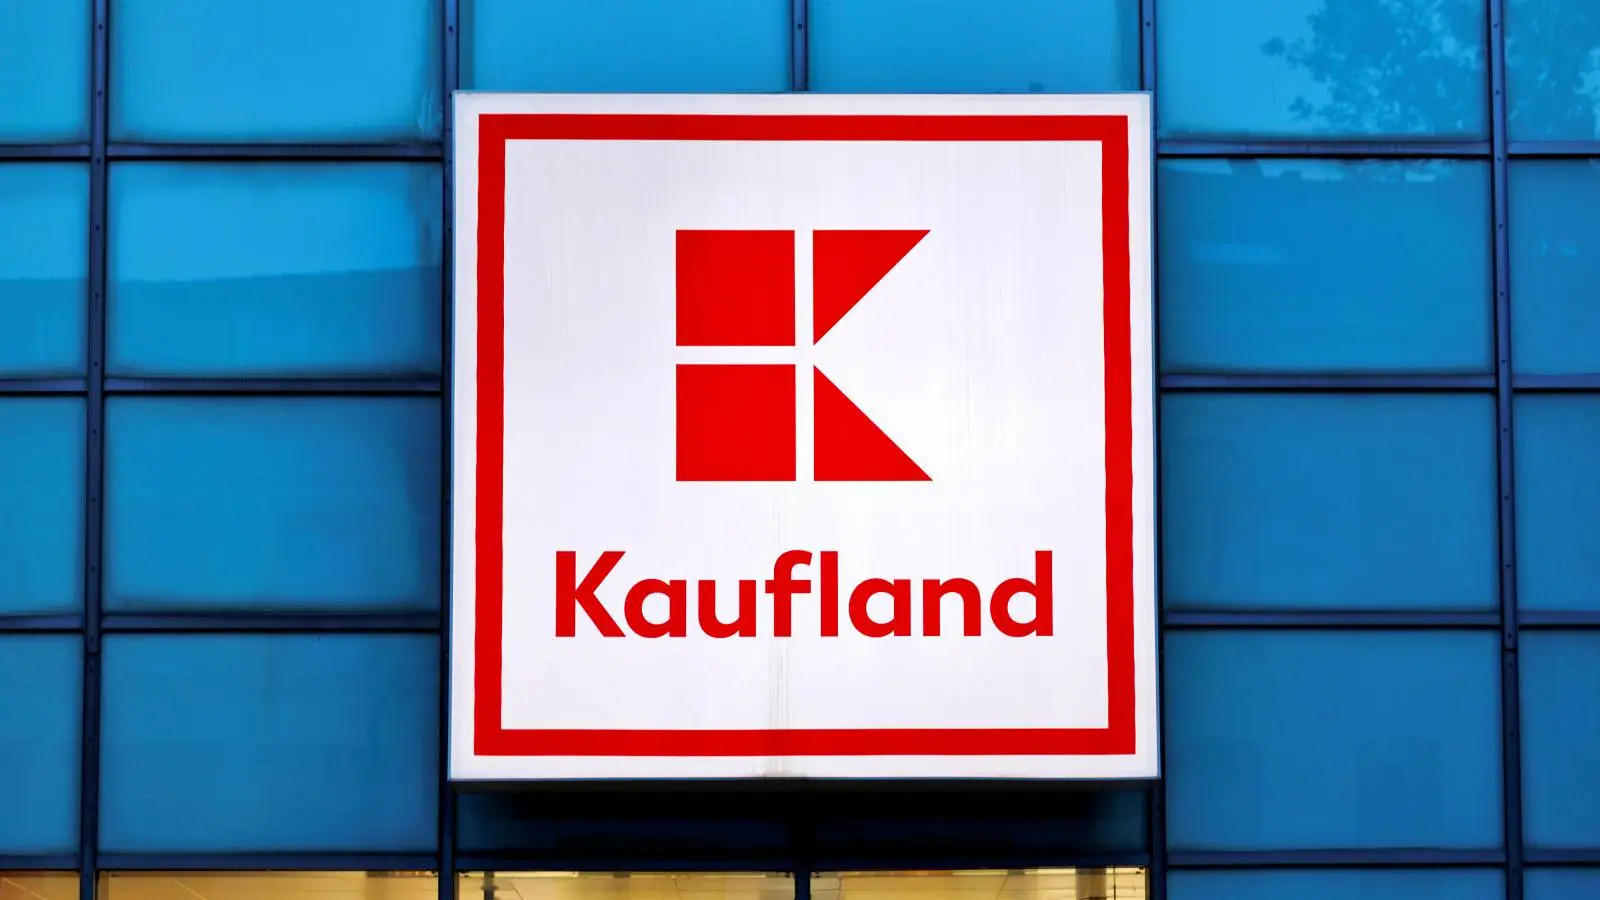 Kaufland Raises the ALARM Signal MILLIONS of Romanians